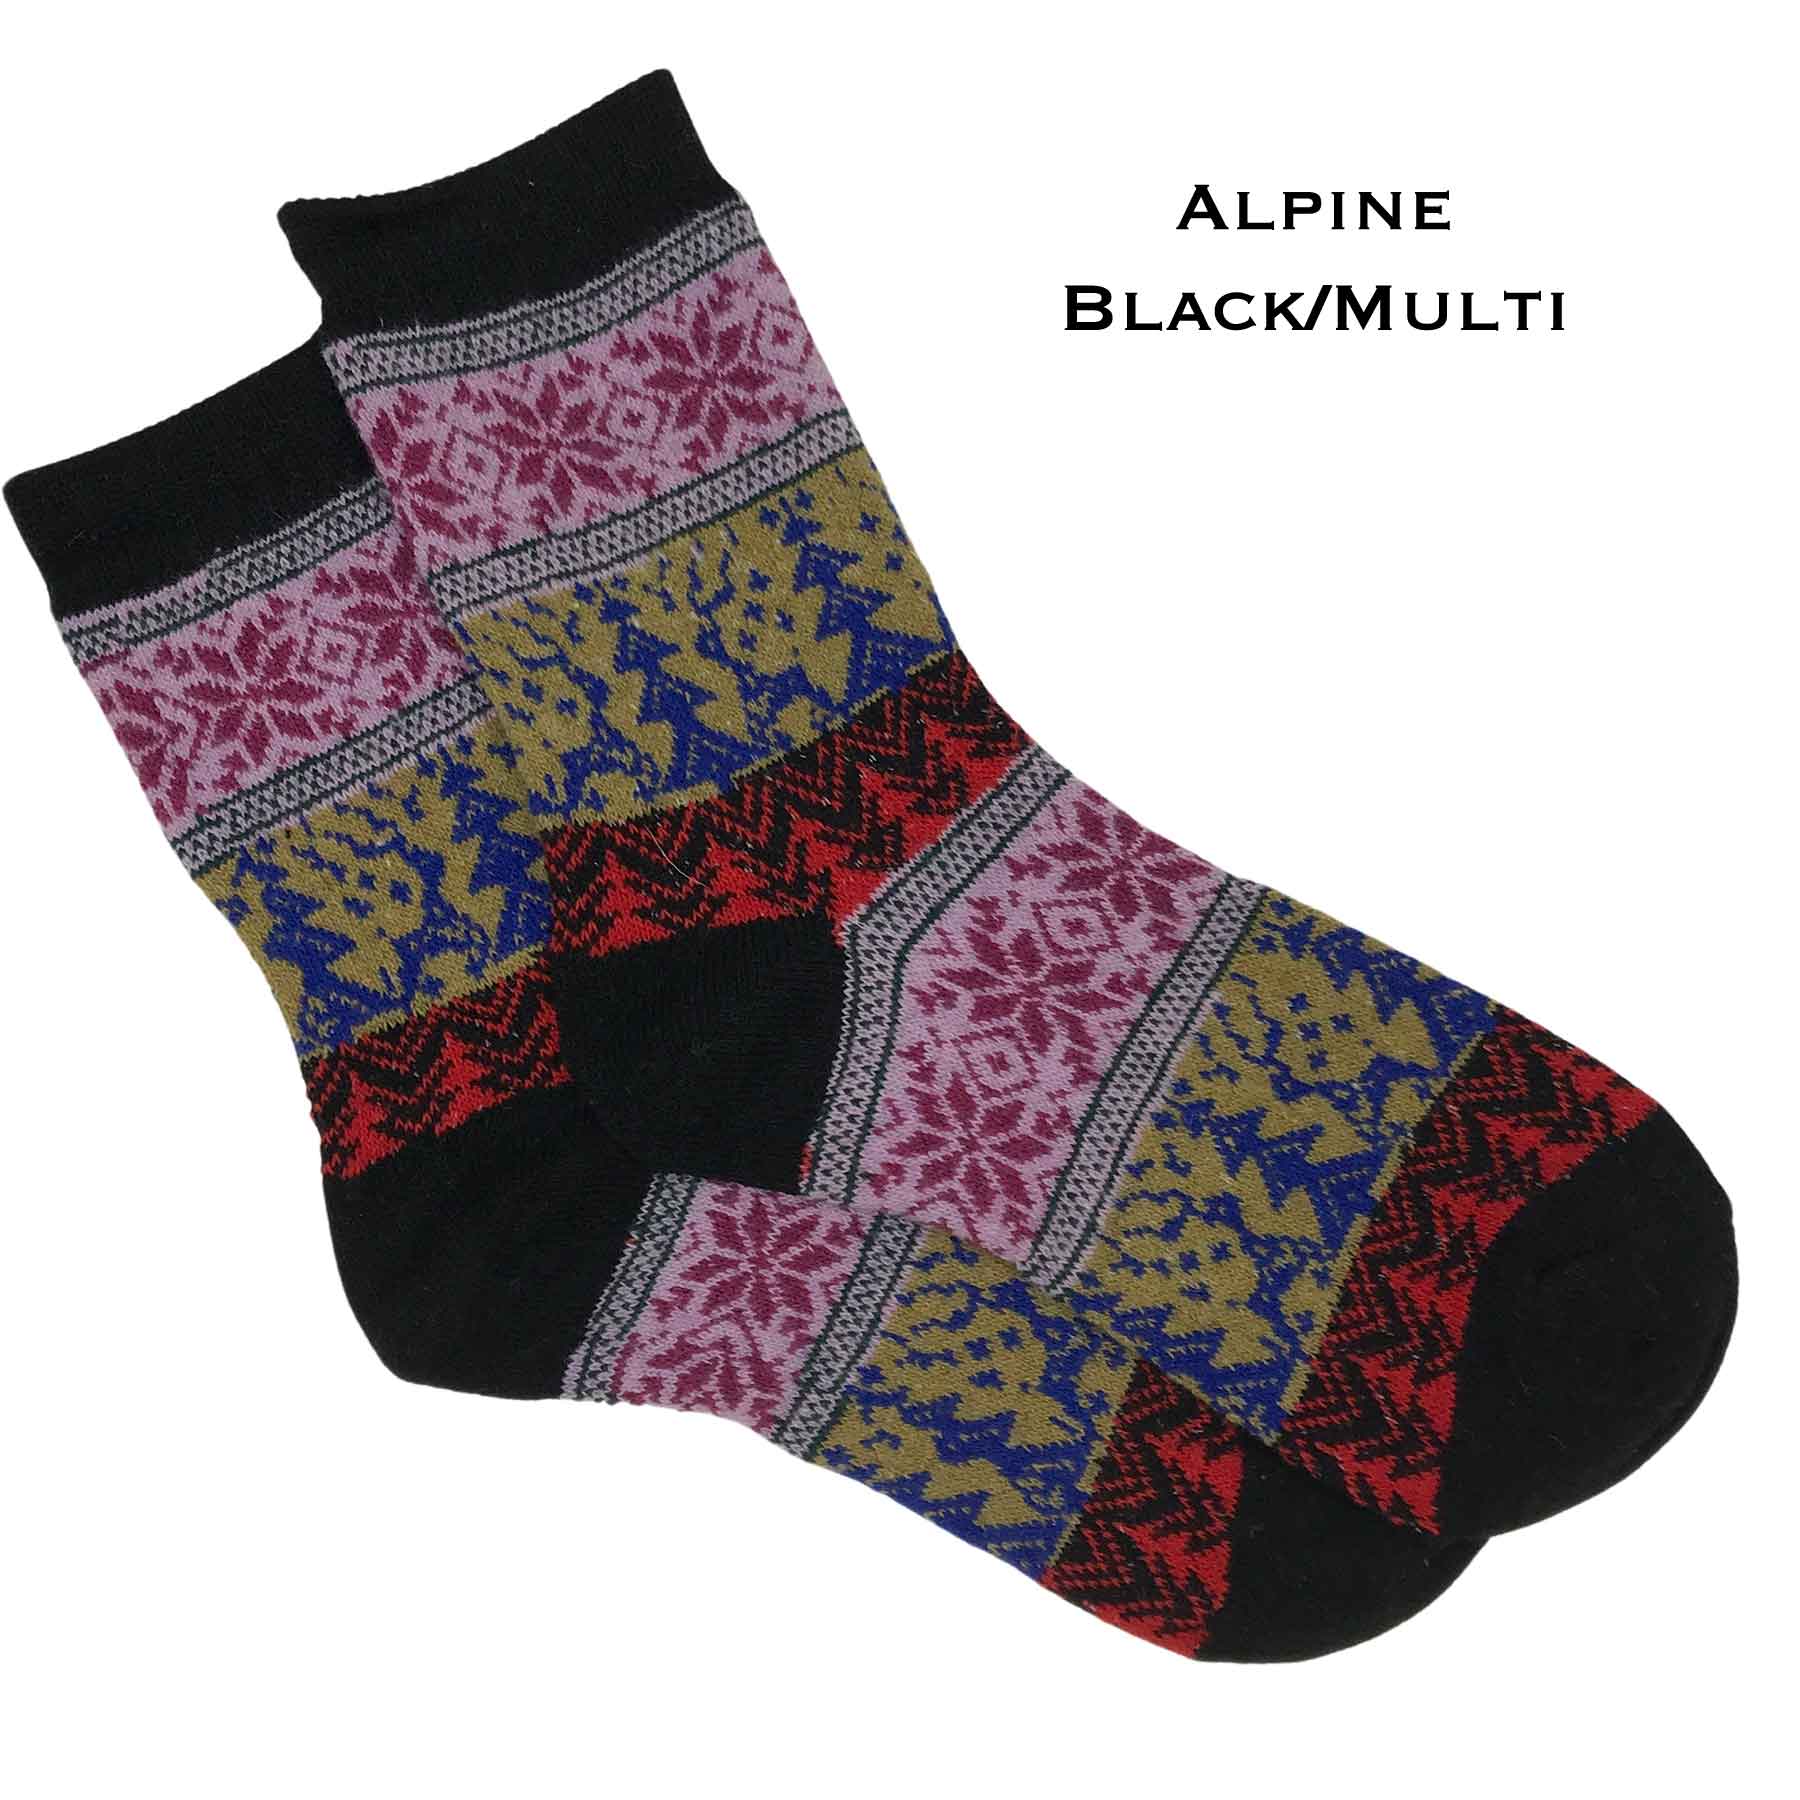 3748 - Crew Socks Alpine - Pink/Multi - Woman's 6-10